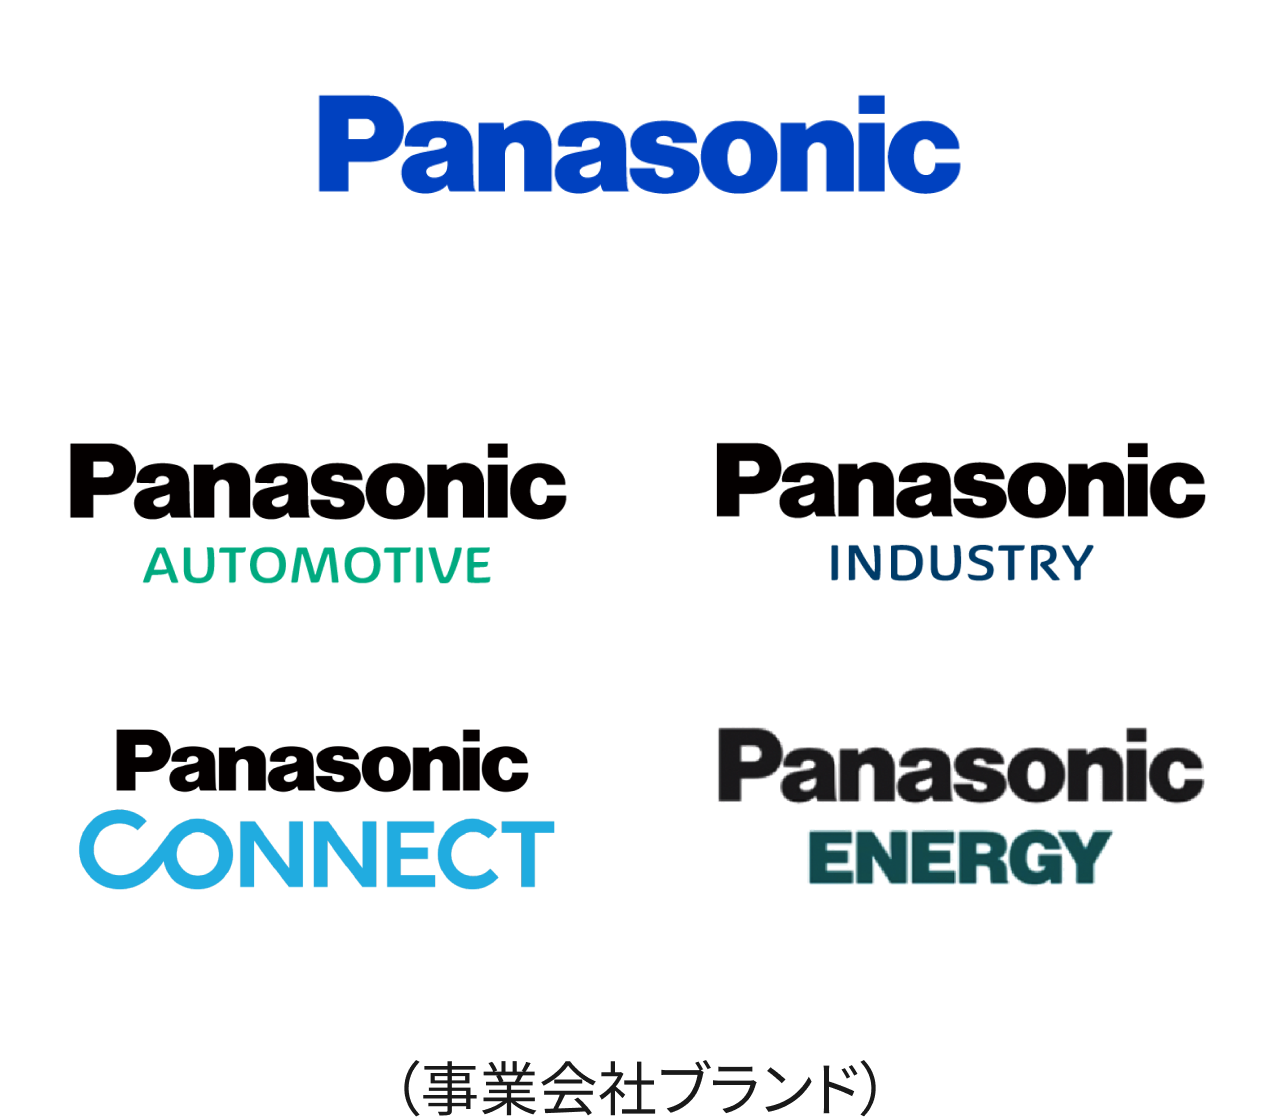 Panasonic（グループブランド）、Panasonic AUTOMOTIVE（事業ブランド）、Panasonic INDUSTRY（事業ブランド）、Panasonic CONNECT（事業ブランド）、Panasonic ENERGY（事業ブランド）